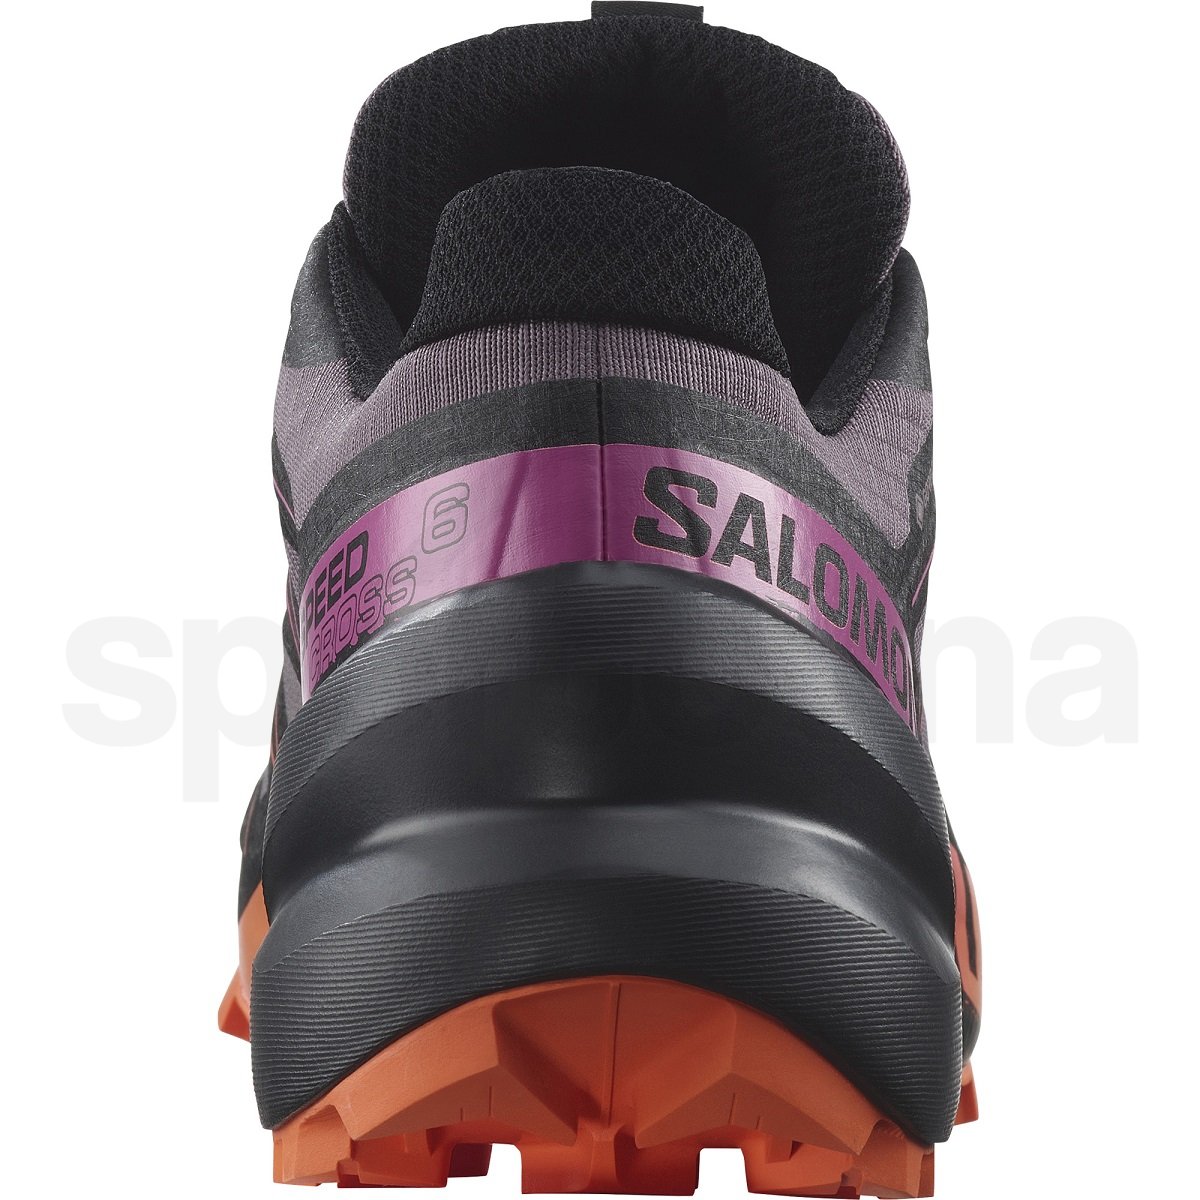 Obuv Salomon Speedcross 6 GTX W - fialová/černá/oranžová